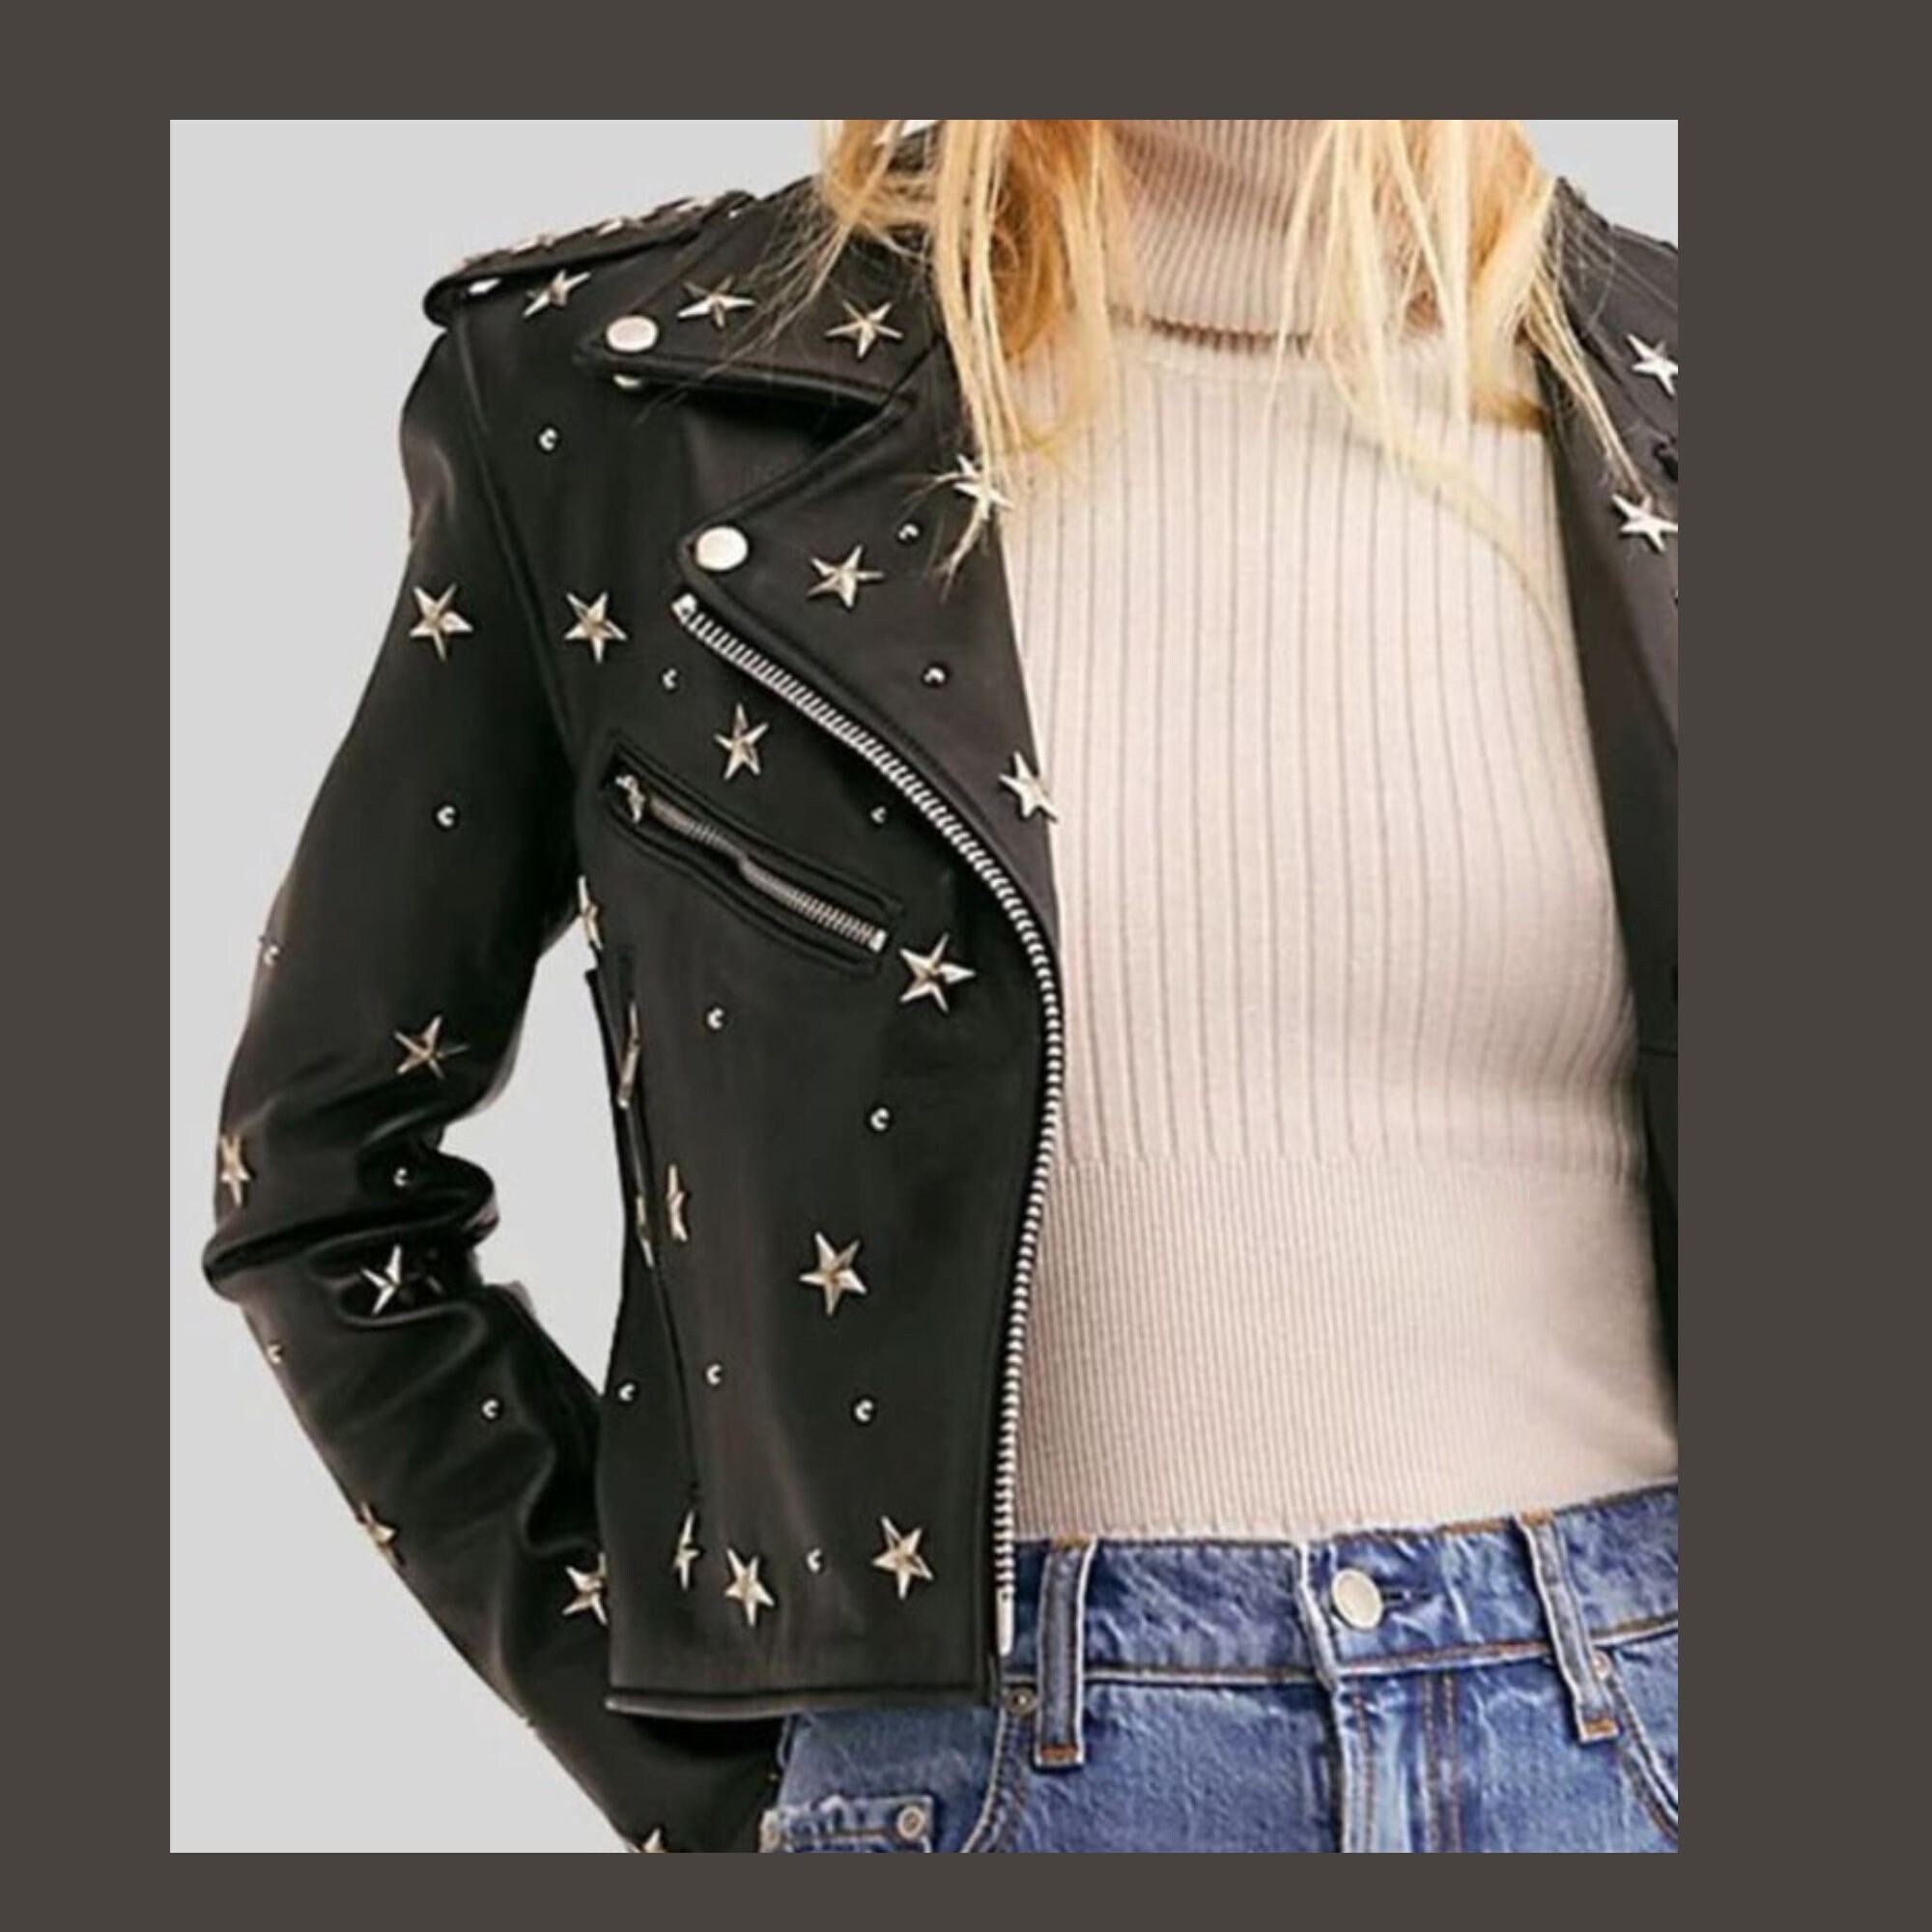 UKTZFBCTW Streetwear Leather Jacket Retro Black Star Embroidered